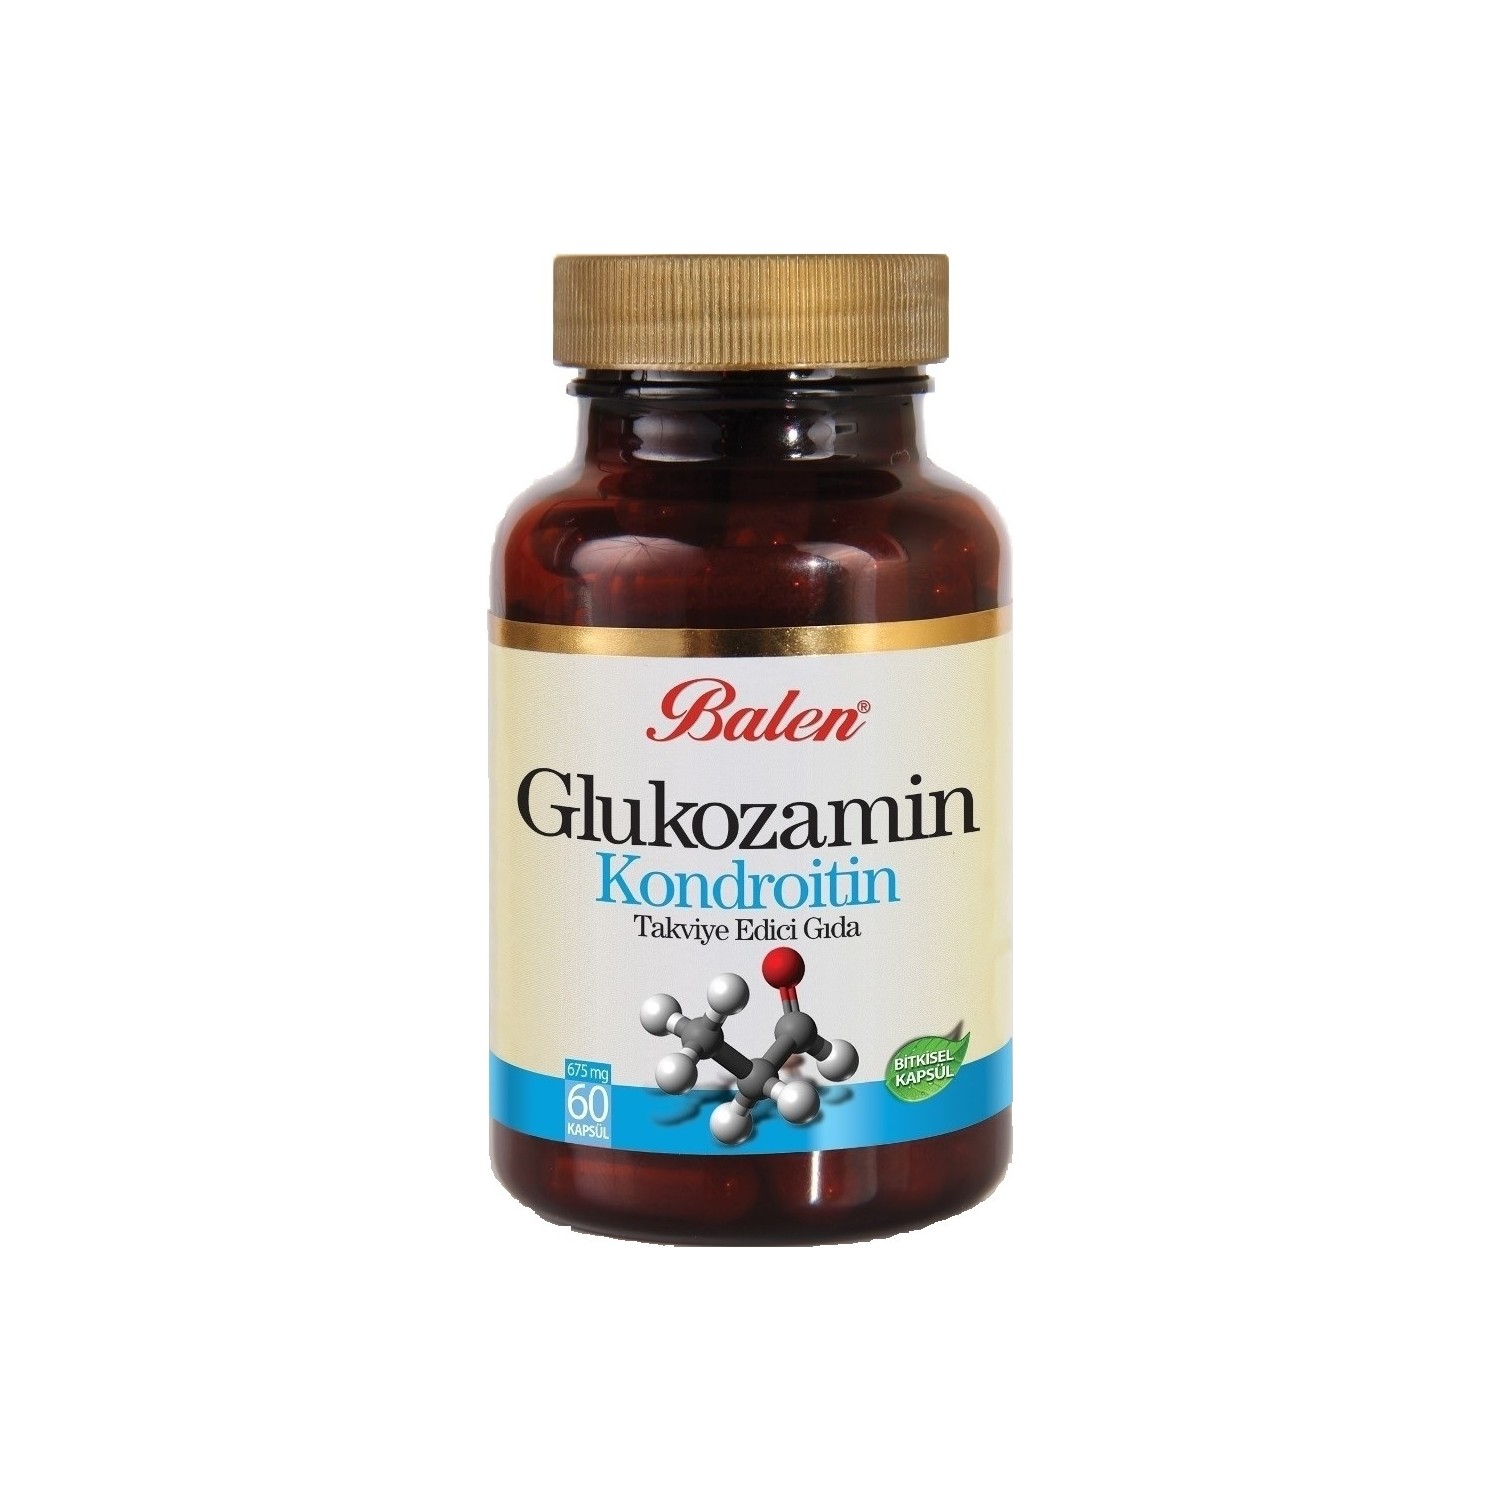 Активная добавка глюкозамин Balen Chondroitin, 60 капсул, 750 мг активная добавка глюкозамин balen chondroitin 60 капсул 750 мг 2 штуки